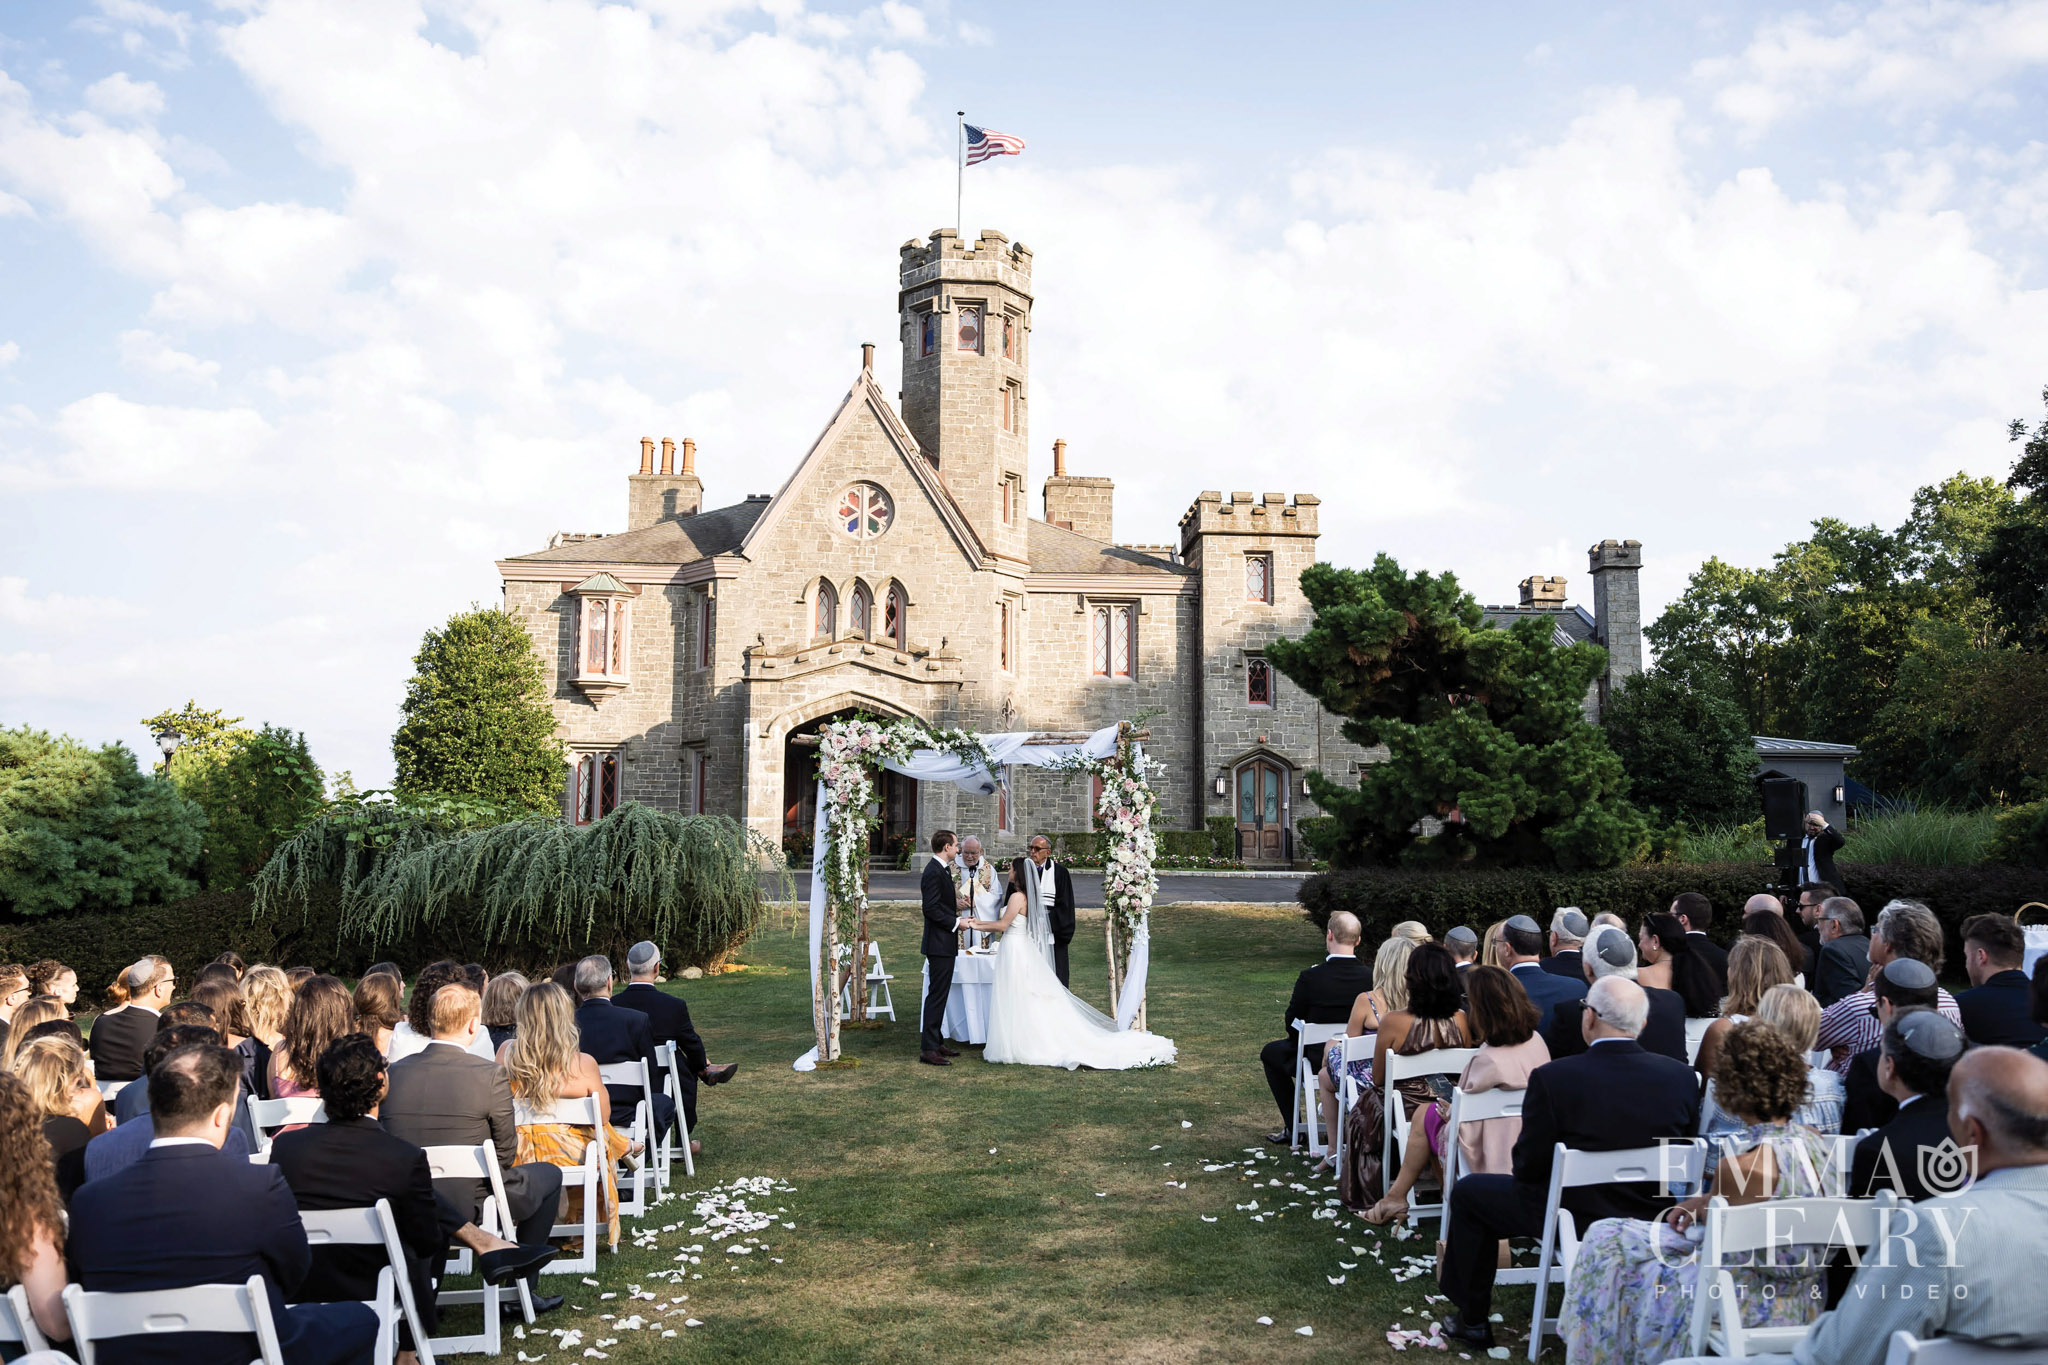 Whitby Castle Wedding